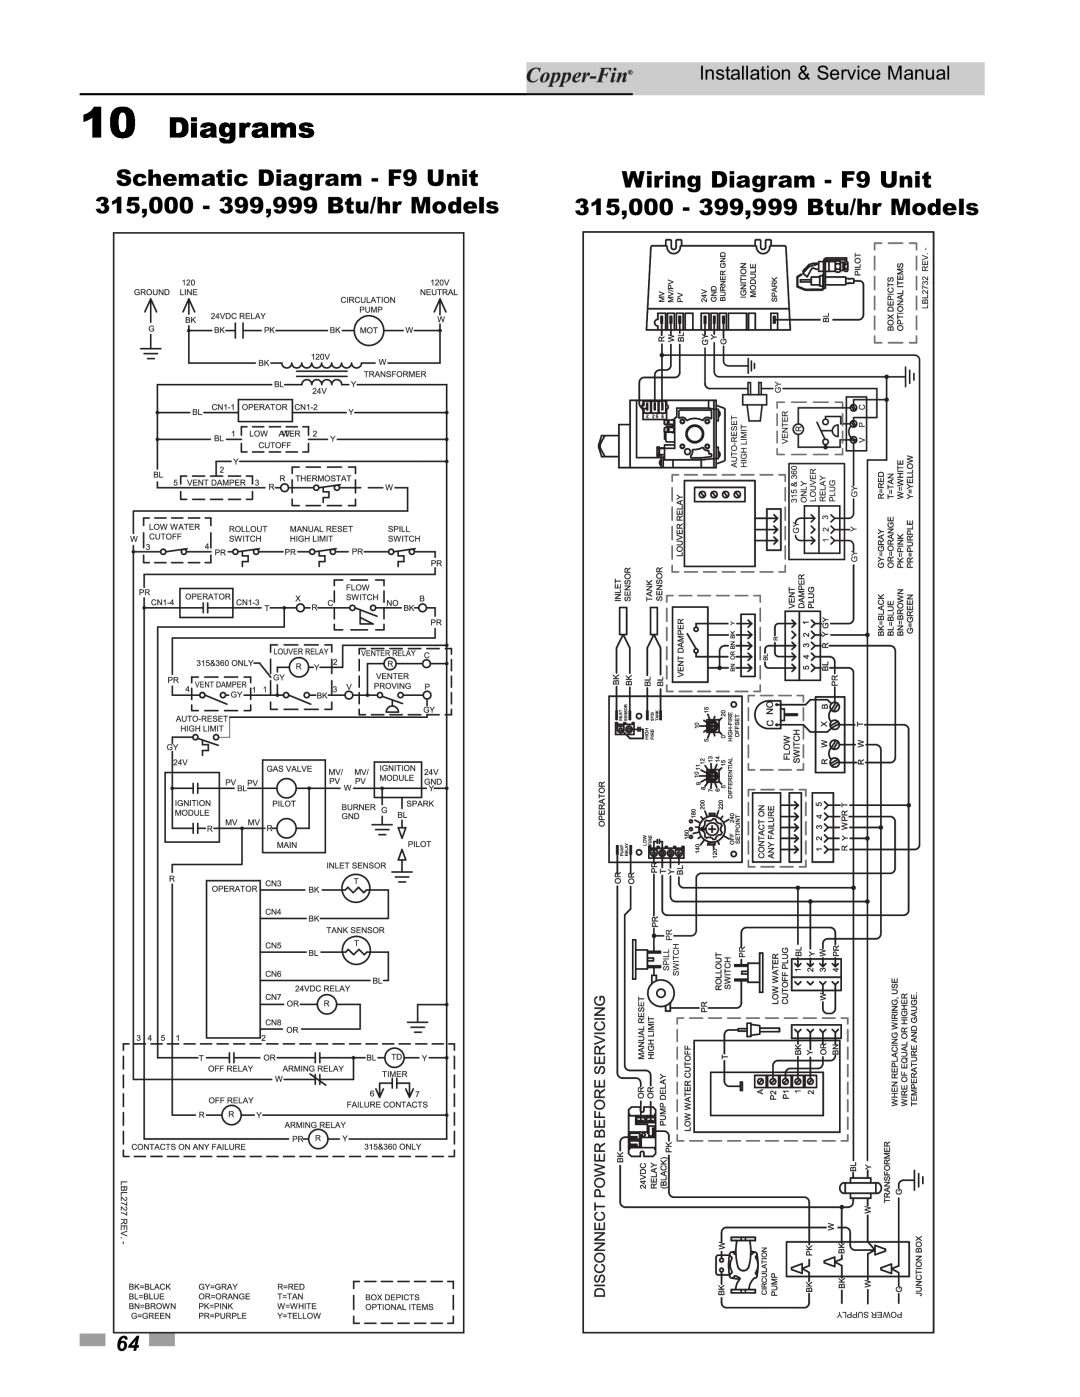 Lochinvar 500, 90 Schematic Diagram - F9 Unit, 315,000 - 399,999 Btu/hr Models, Wiring Diagram - F9 Unit, Diagrams 